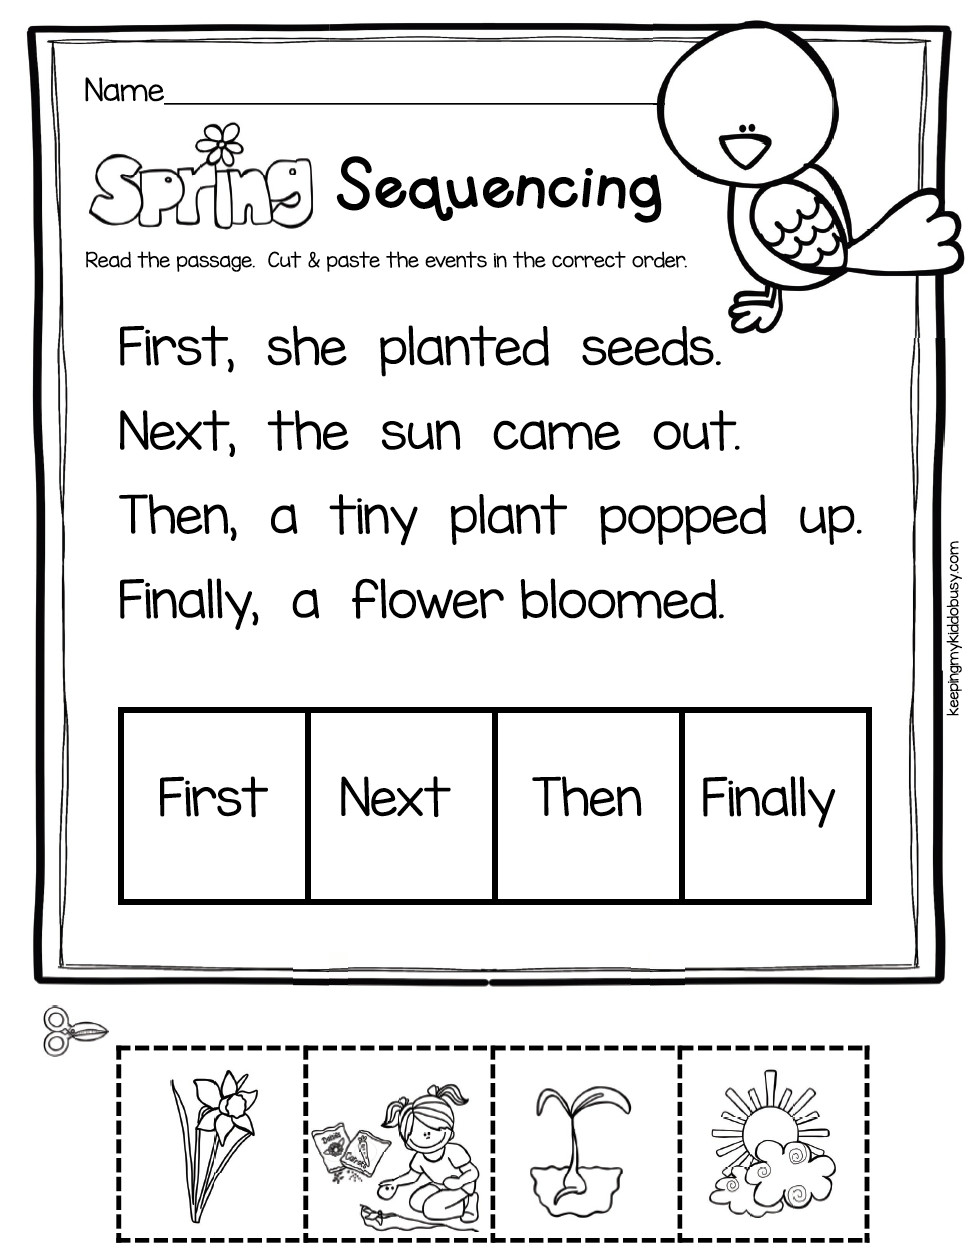 Sequence Worksheets for Kindergarten New Sequencing events Worksheet